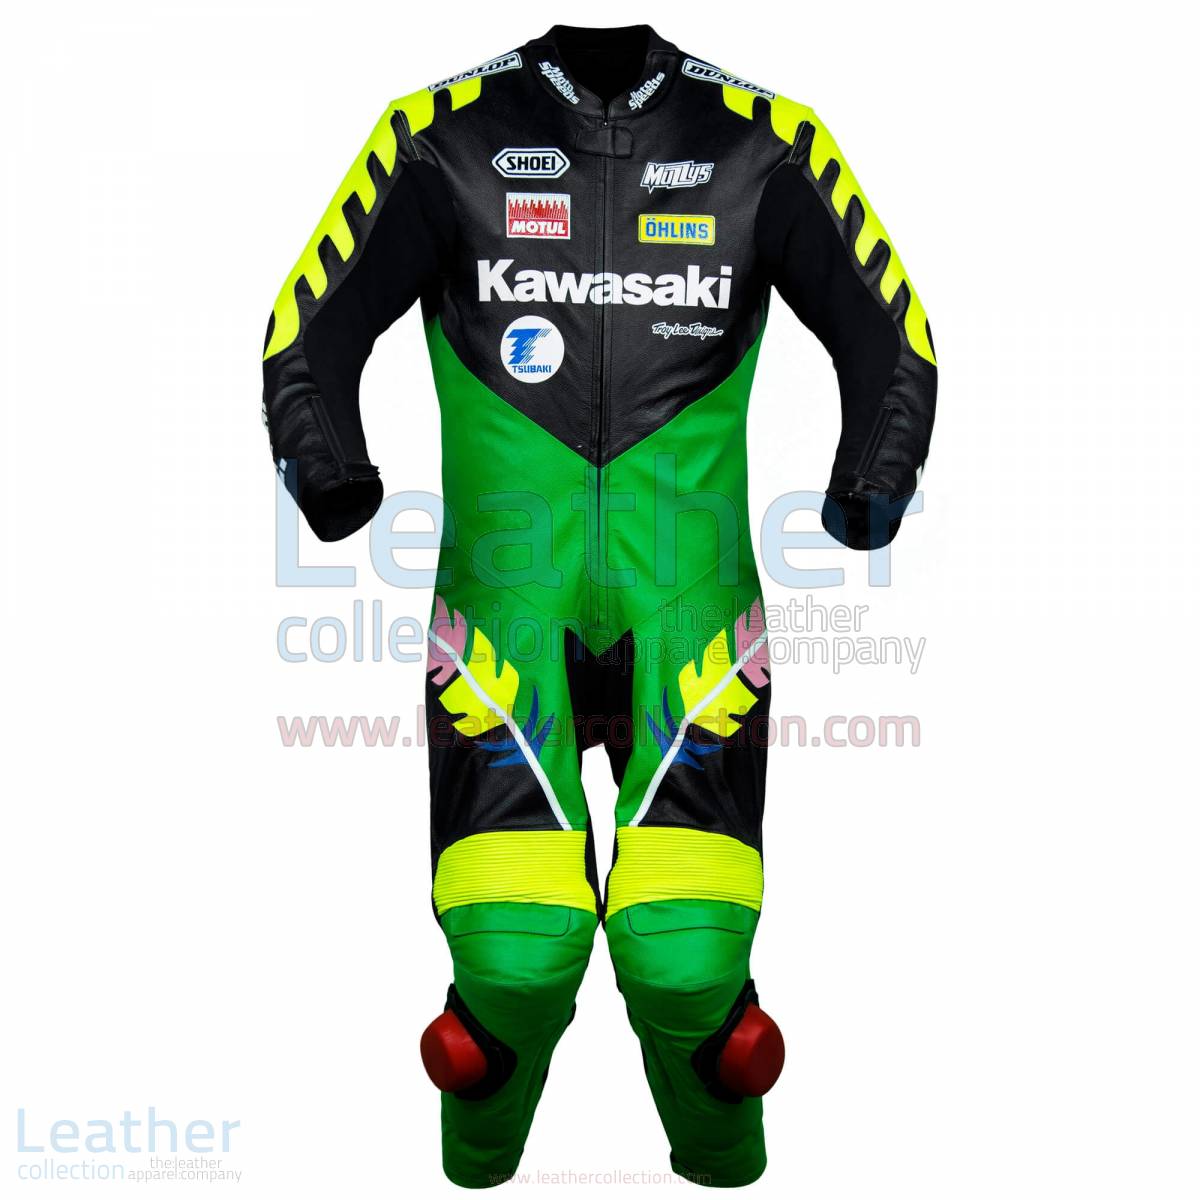 Scott Russell Kawasaki GP 1993 Leather Suit – Kawasaki Suit